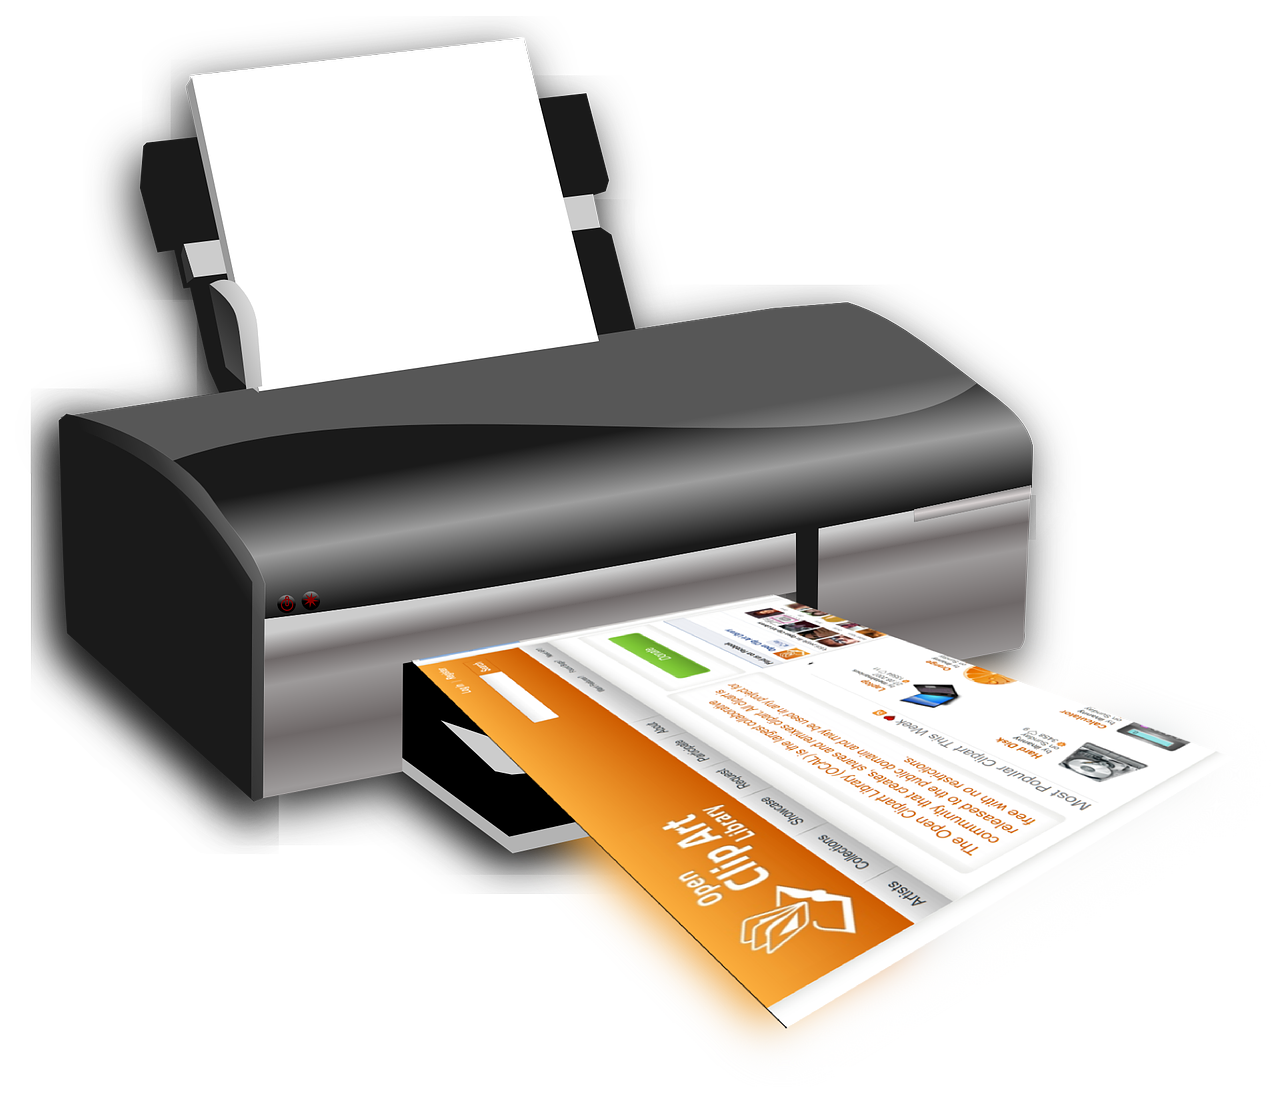 print printer printing free photo